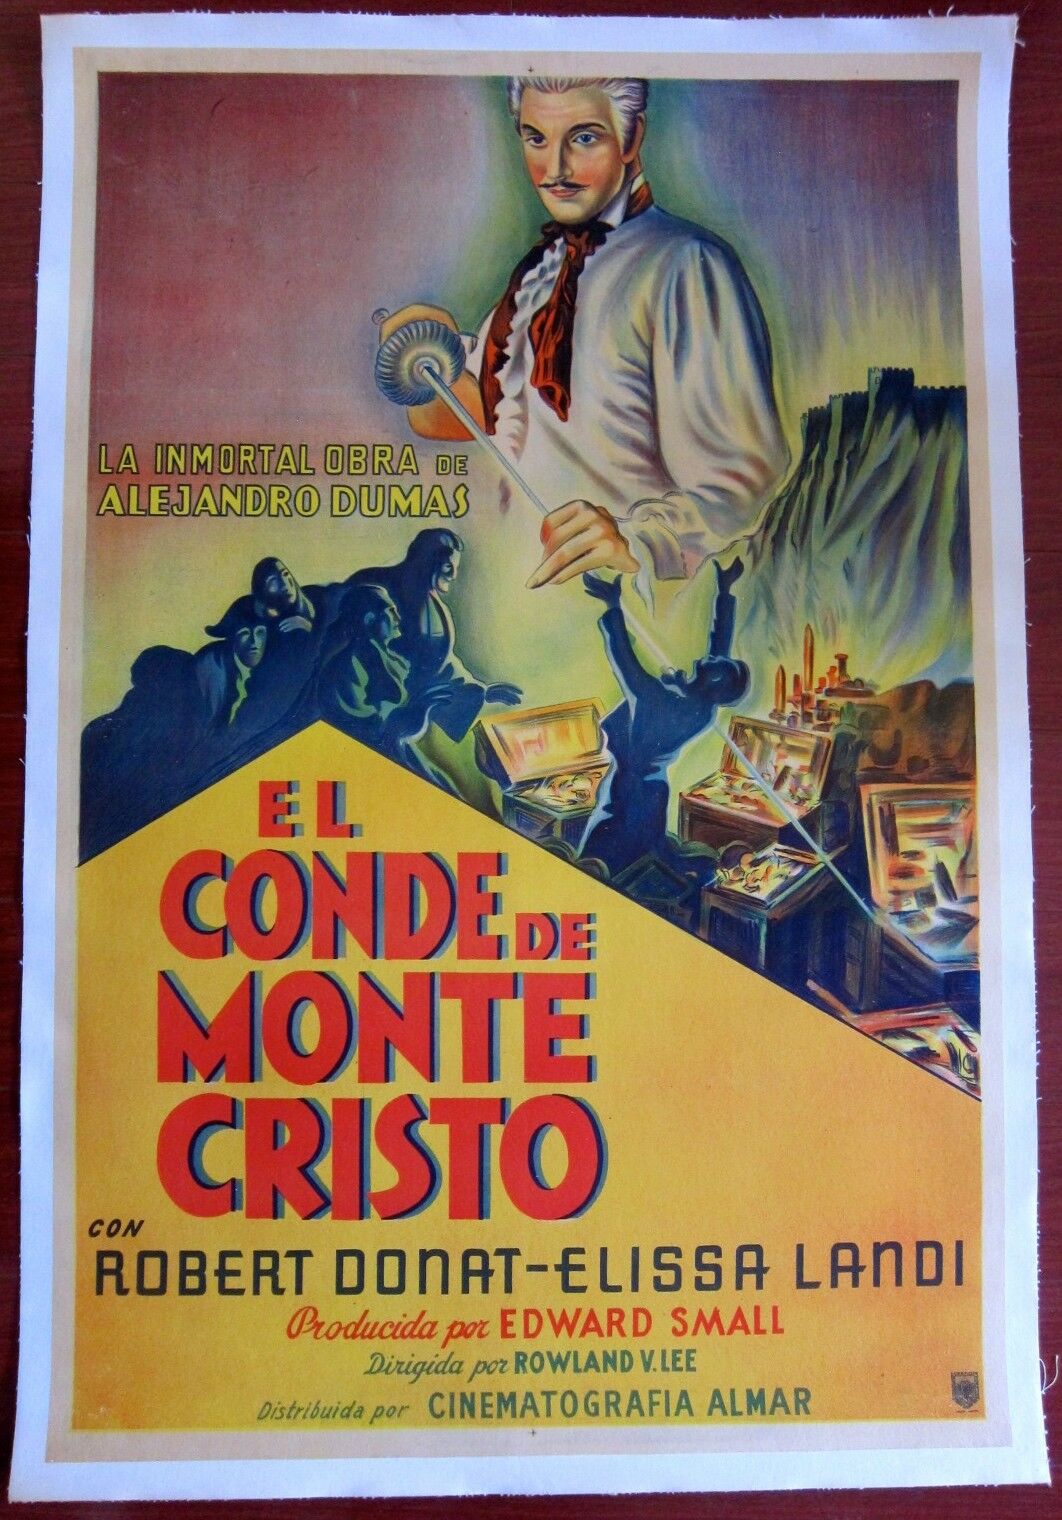 Count Of Monte Cristo - Original 1934 Argentinean Lb Poster - Swashbuckler Art!